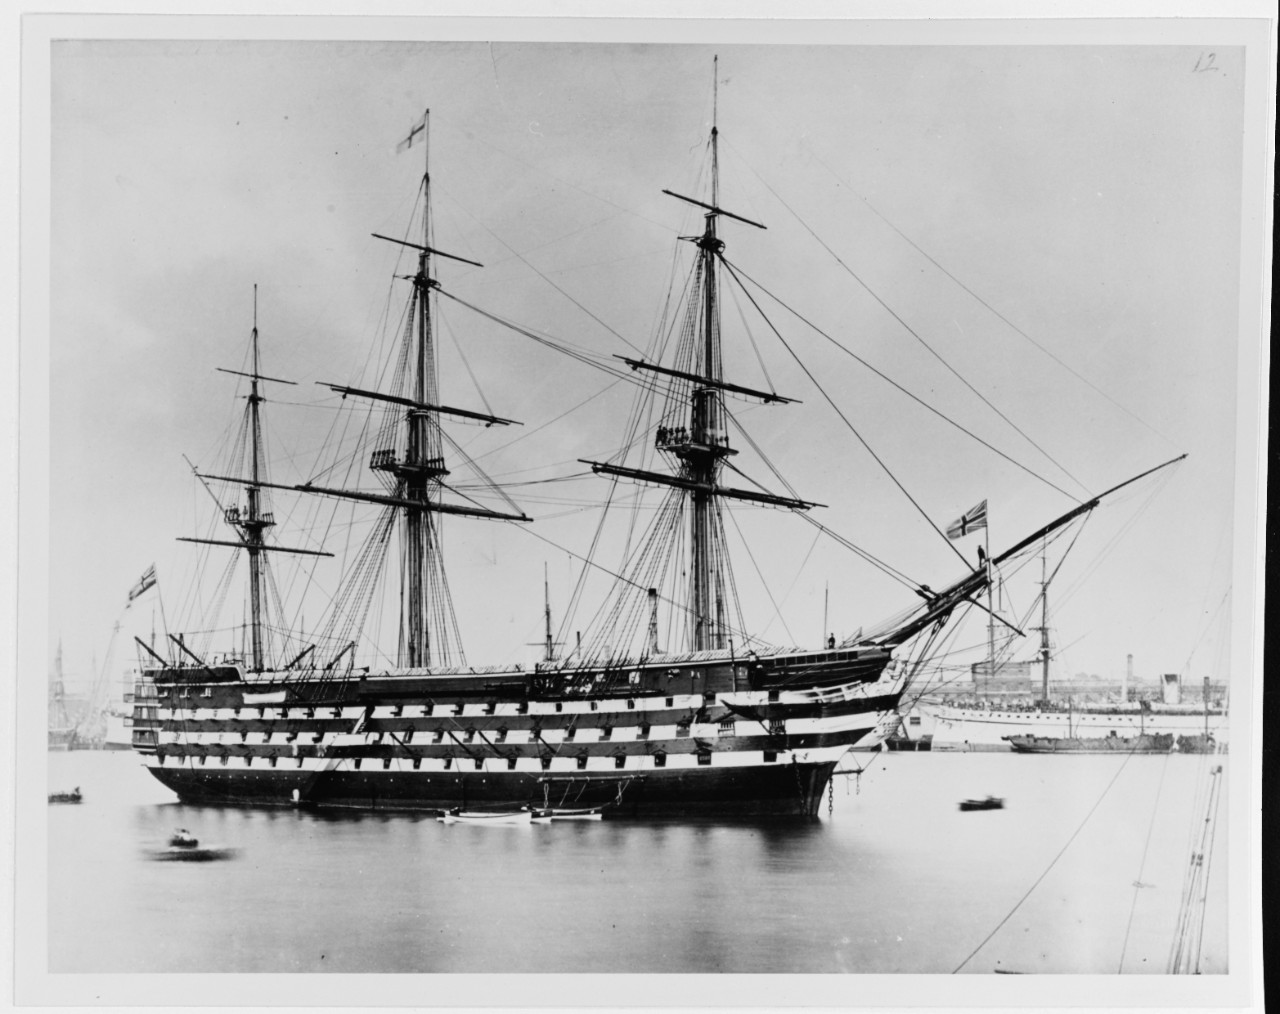 DUKE OF WELLINGTON (British steam ship of the line, 1852-1904)